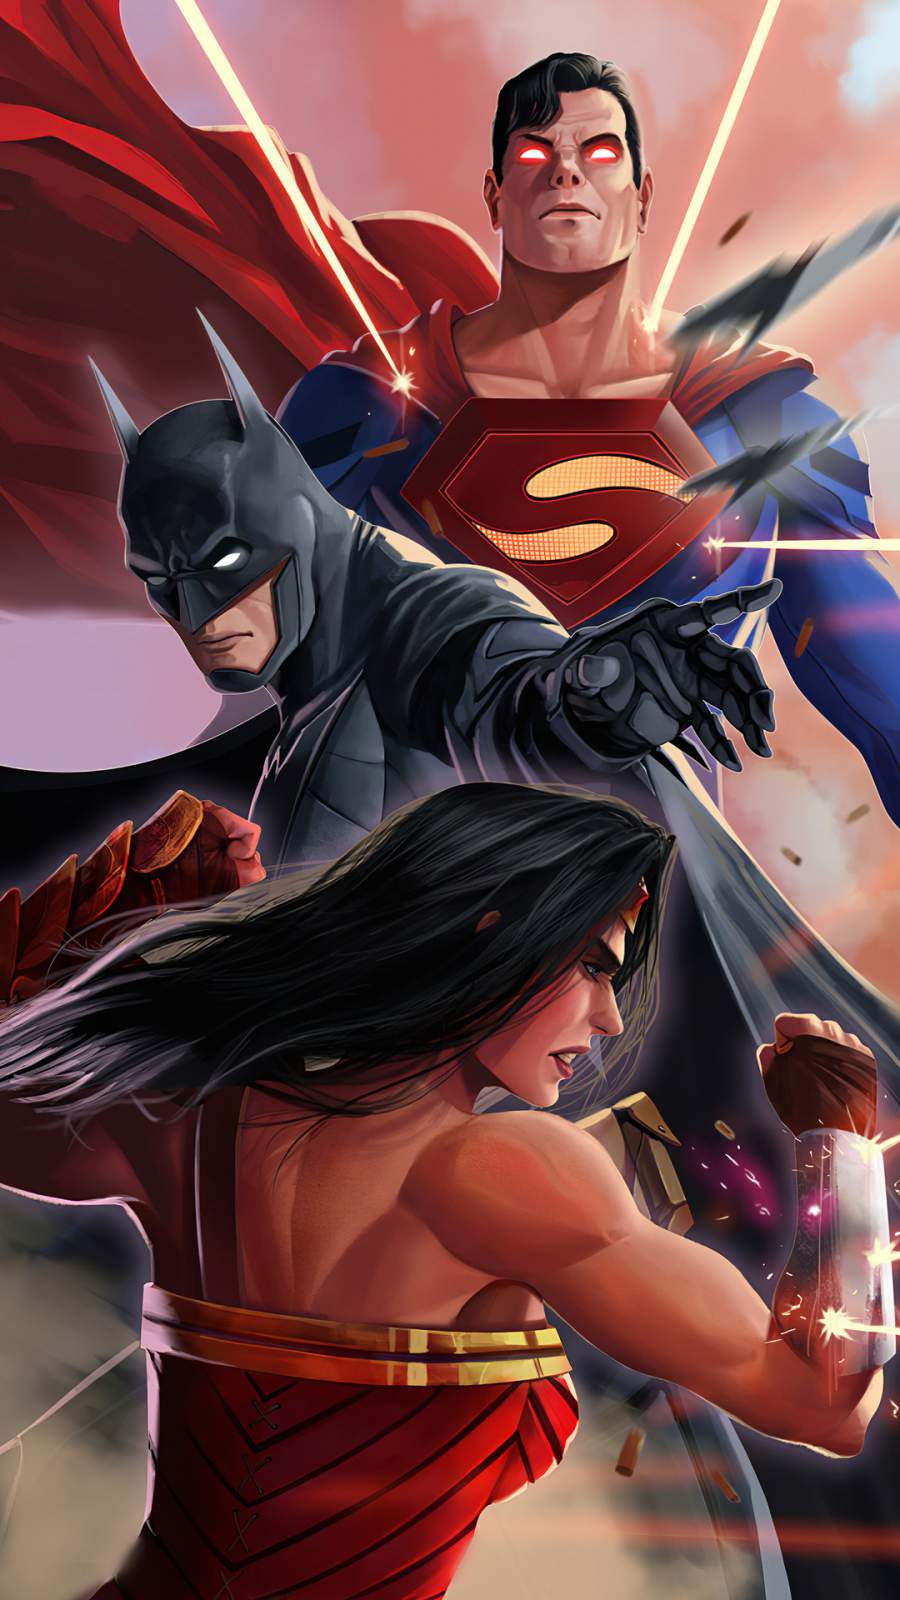 DC Superheroes IPhone Wallpaper - IPhone Wallpapers : iPhone Wallpapers